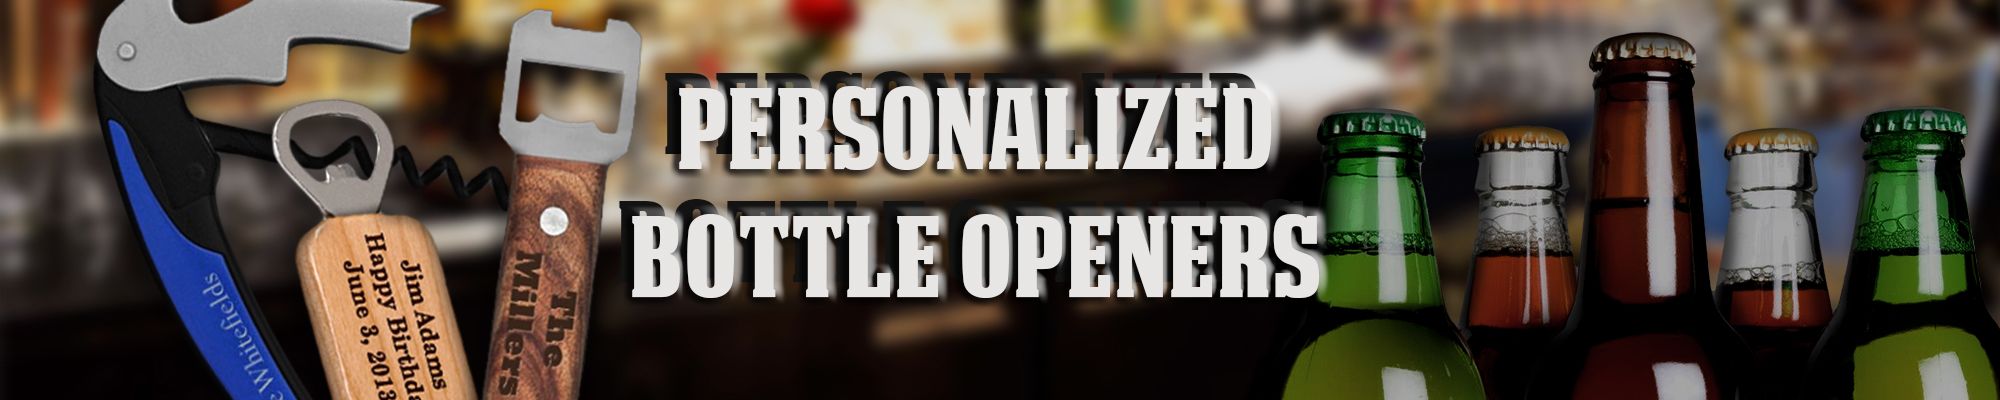 Personalized Bottle Openers